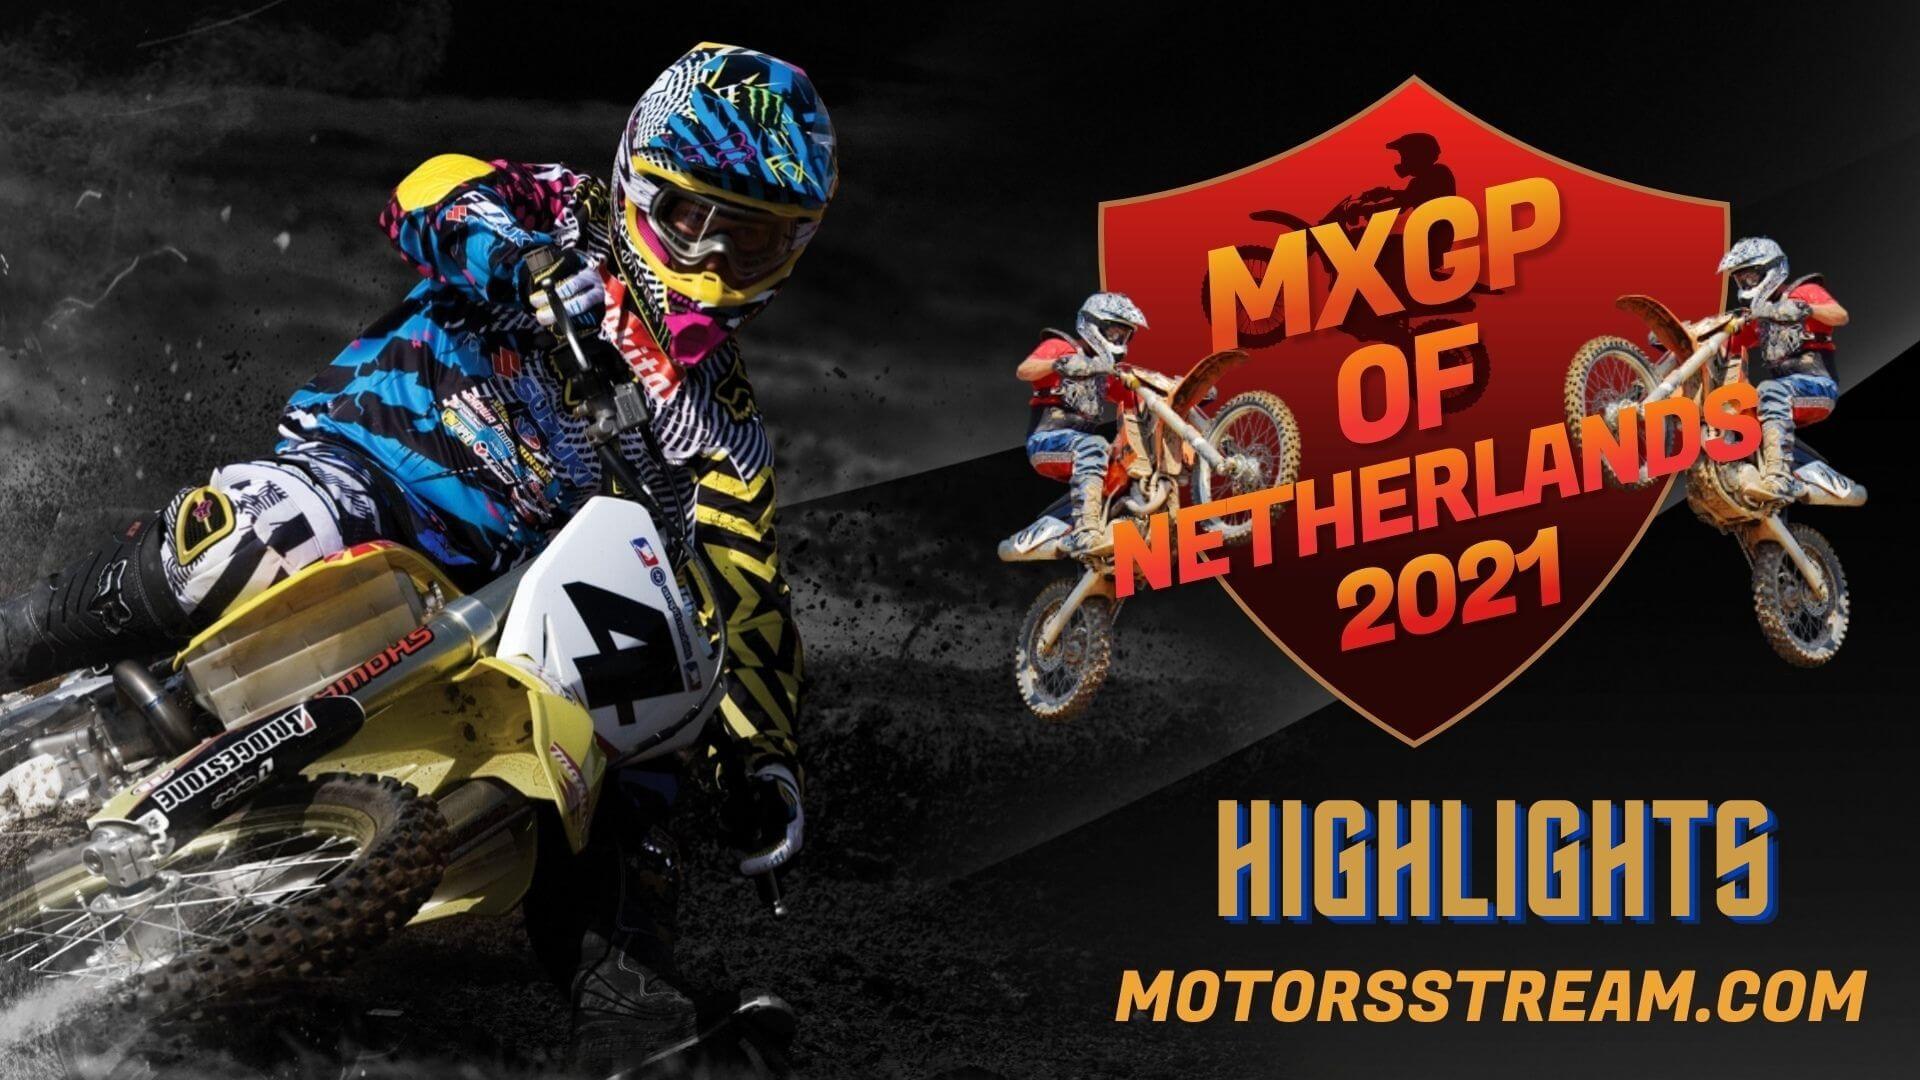 FIM Motocross WC Netherlands Highlight 2021 MXGP